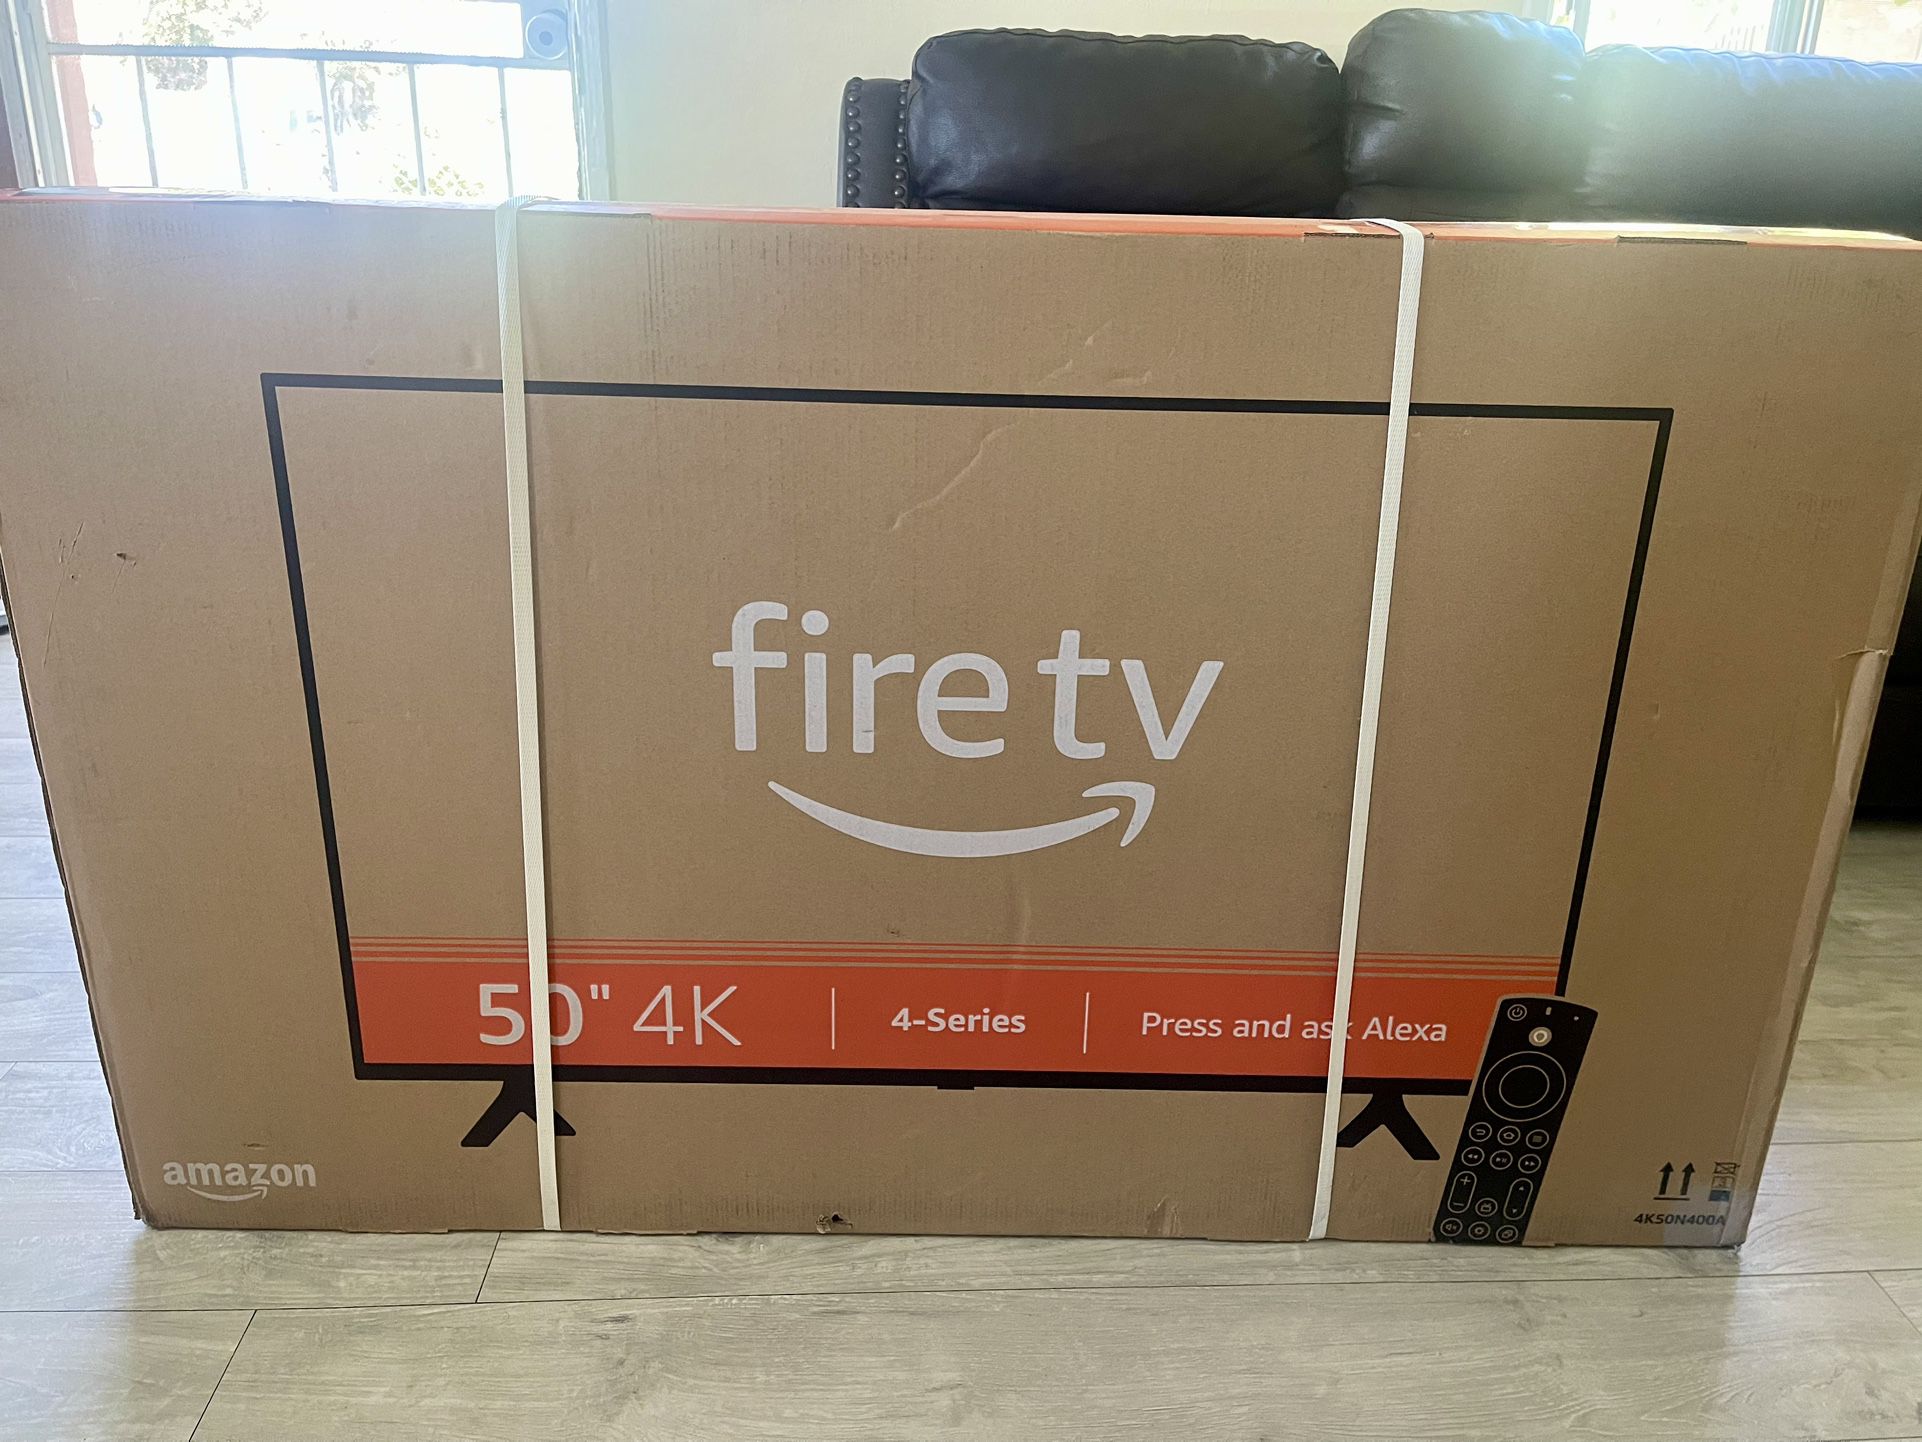 Amazon Fire TV 50" 4-Series 4K UHD smart TV, stream live TV